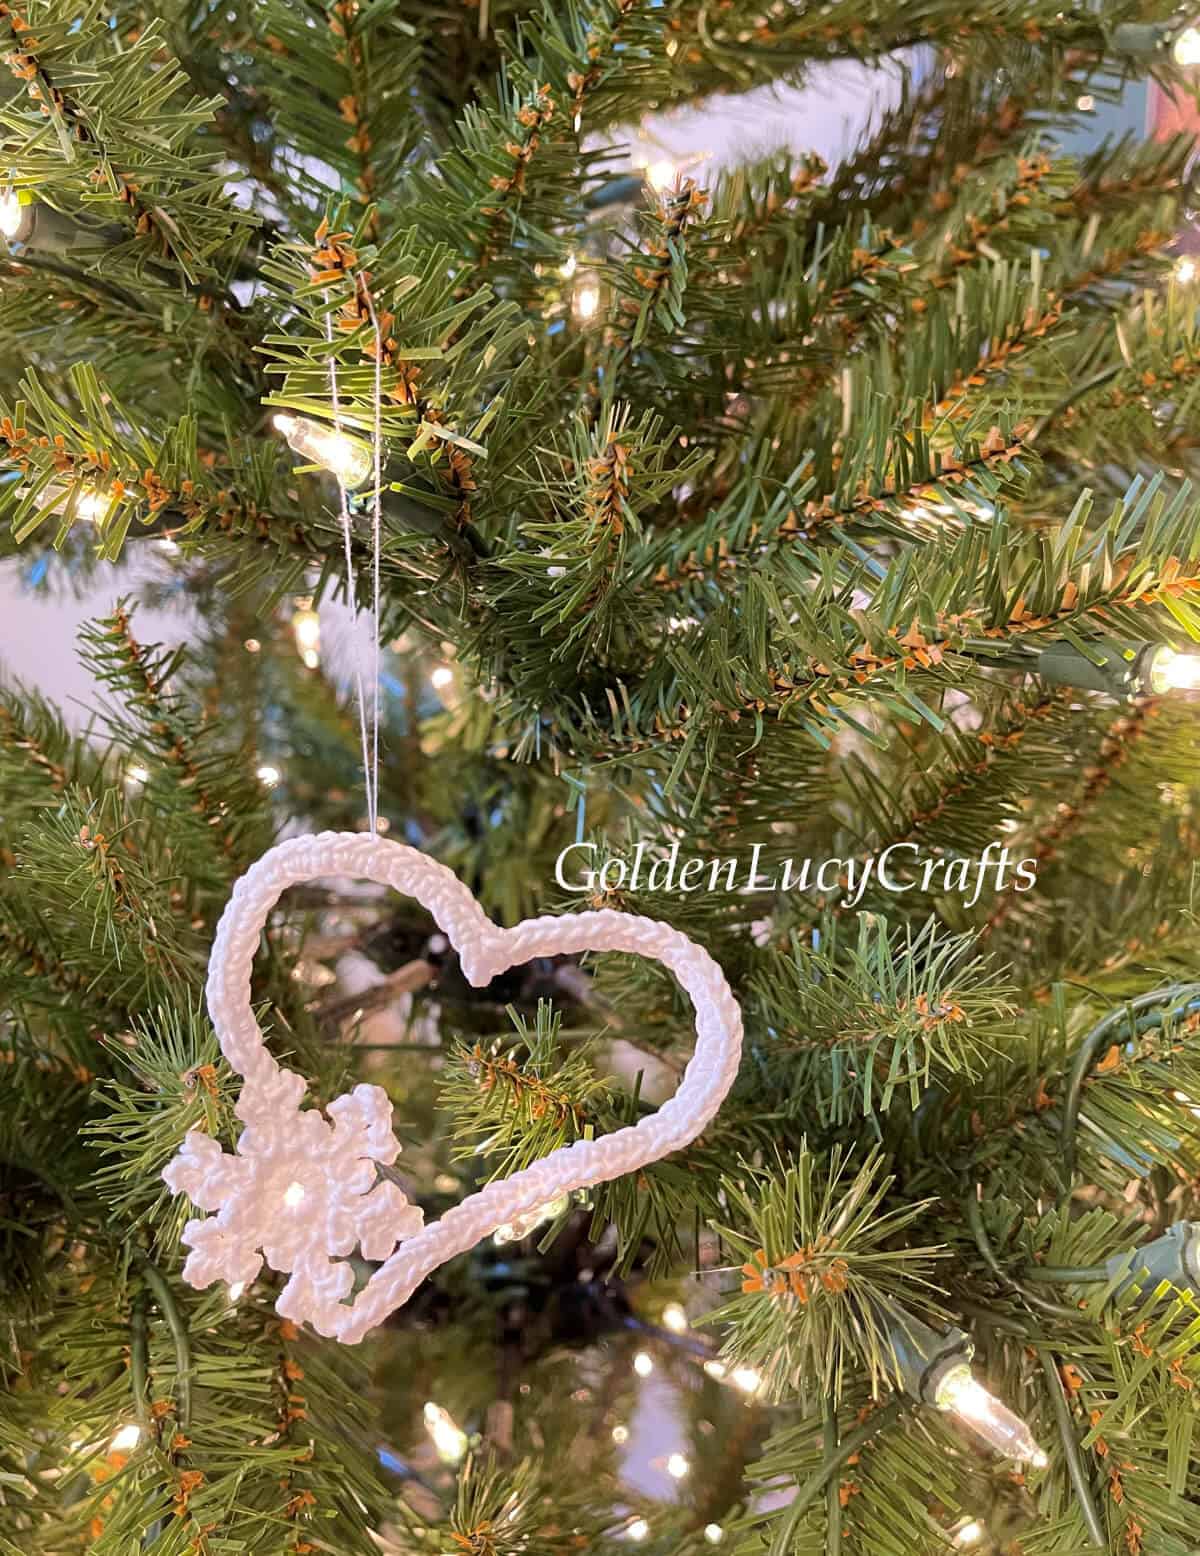 Crochet snowflake heart ornament hanging on Christmas tree.